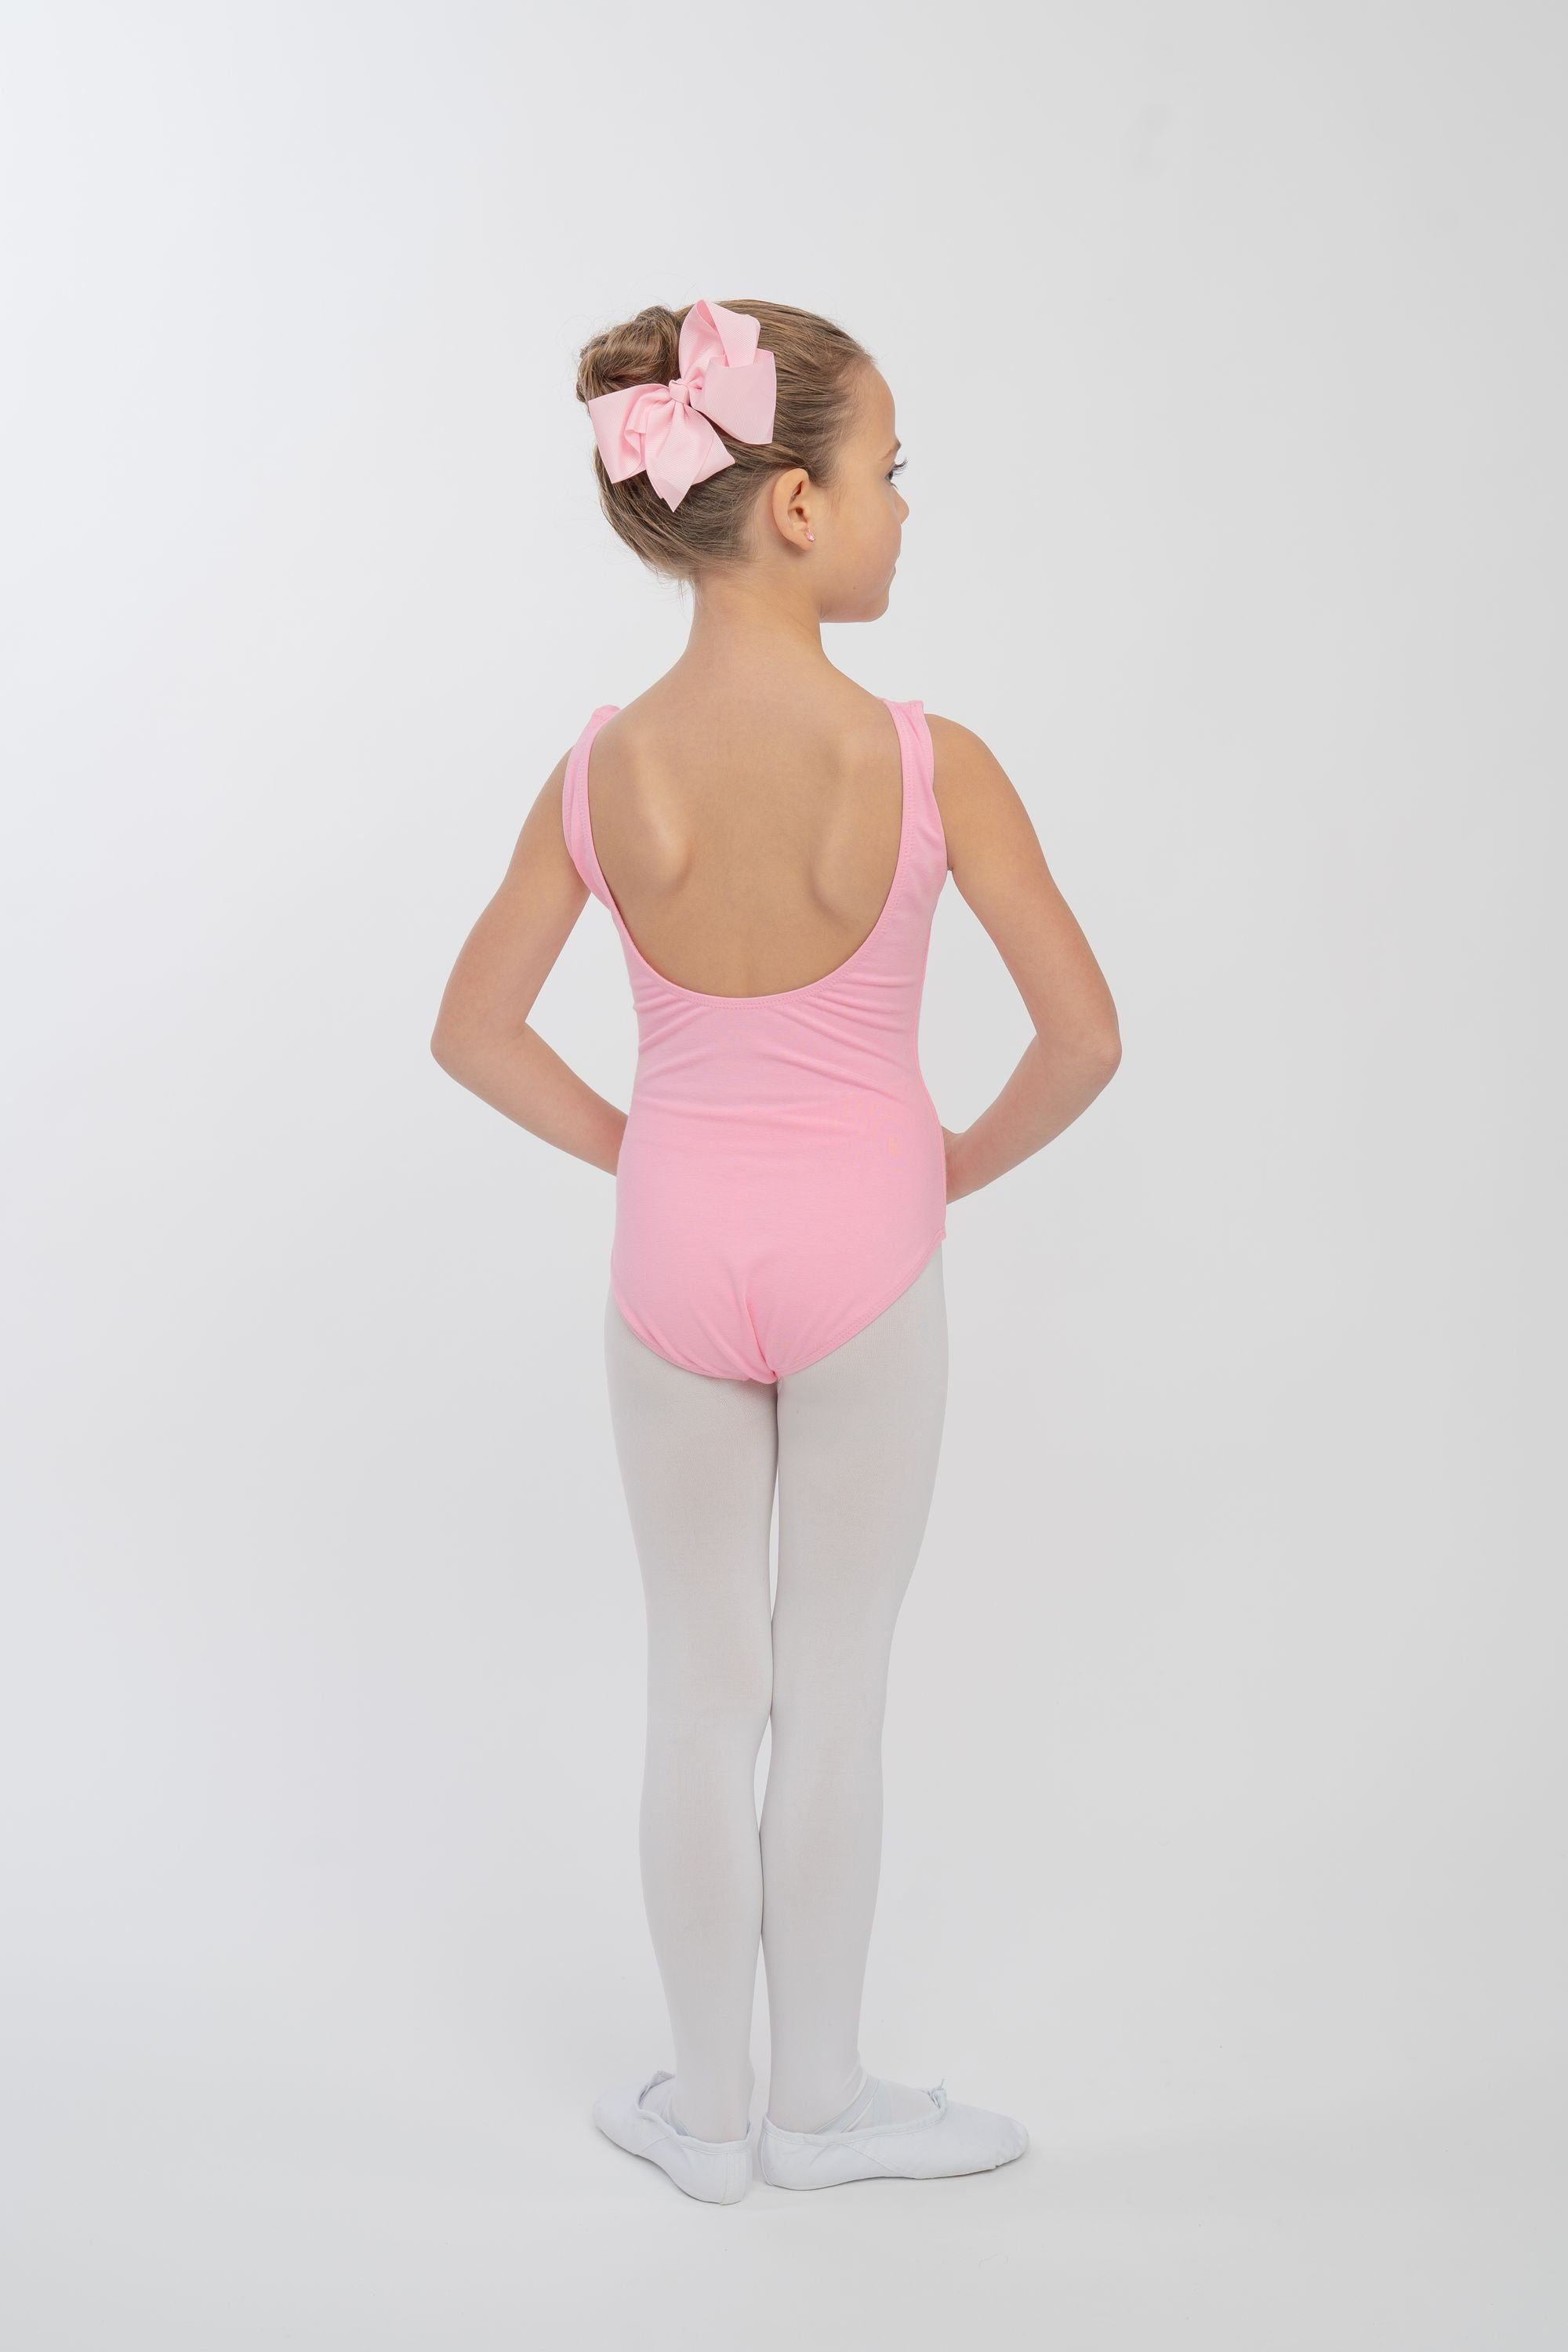 rosa Ballettbody ärmelloses Linda Kinder Body tiefem mit Trikot fürs Ballett Rückenausschnitt tanzmuster